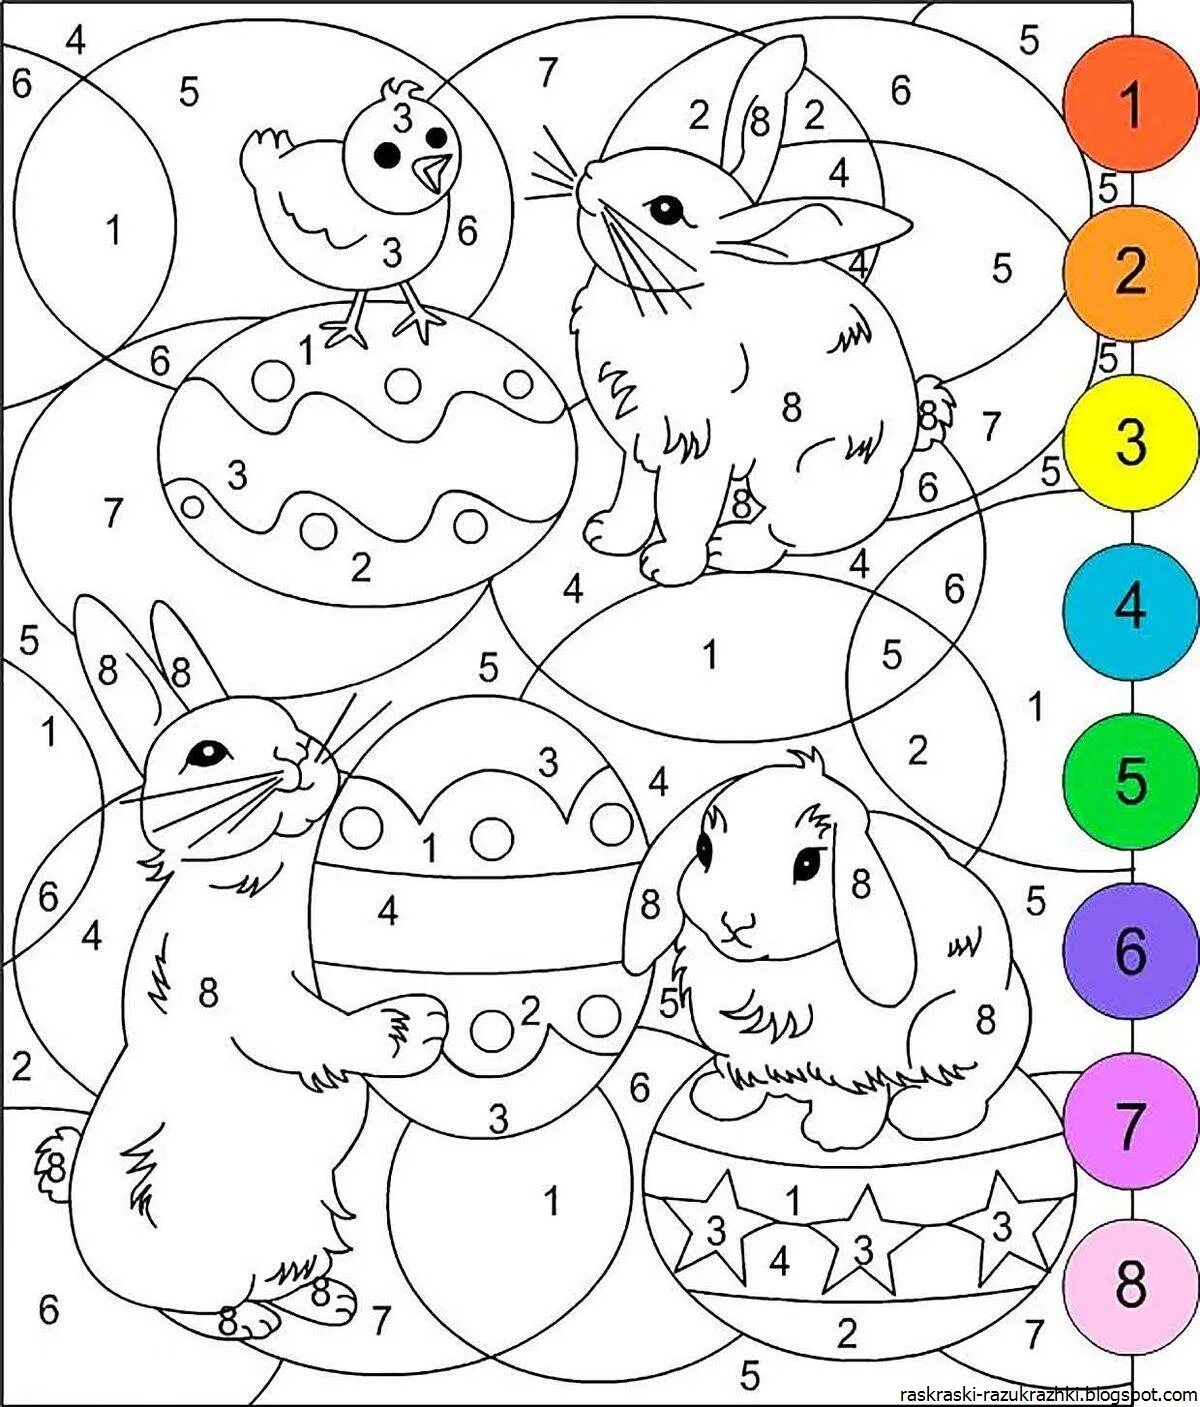 Color-joyous coloring page digital для детей 6-7 лет